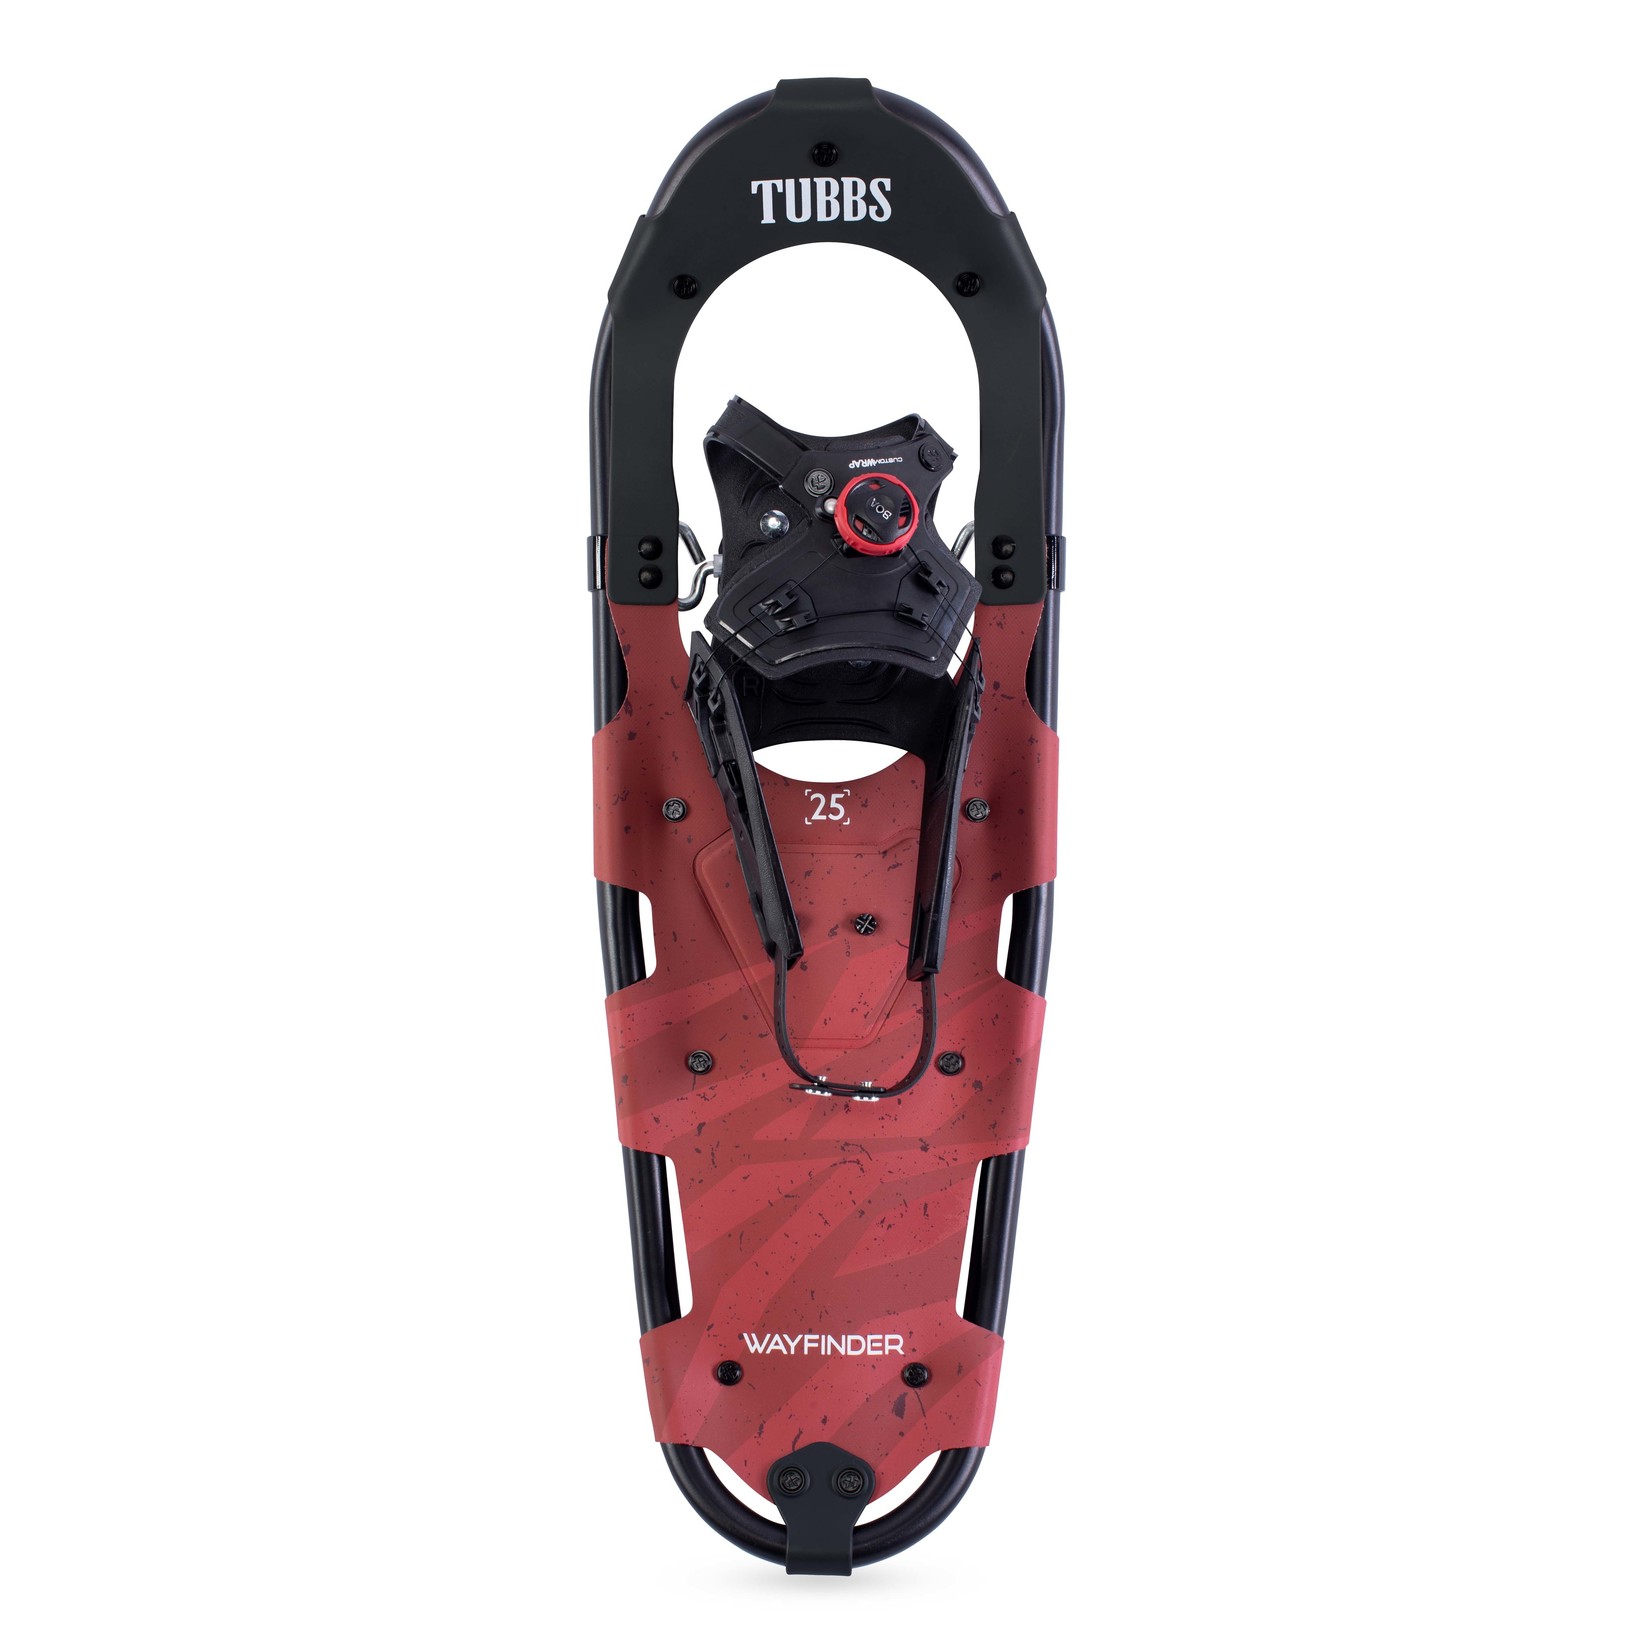 Tubbs Tubbs Wayfinder Snowshoes